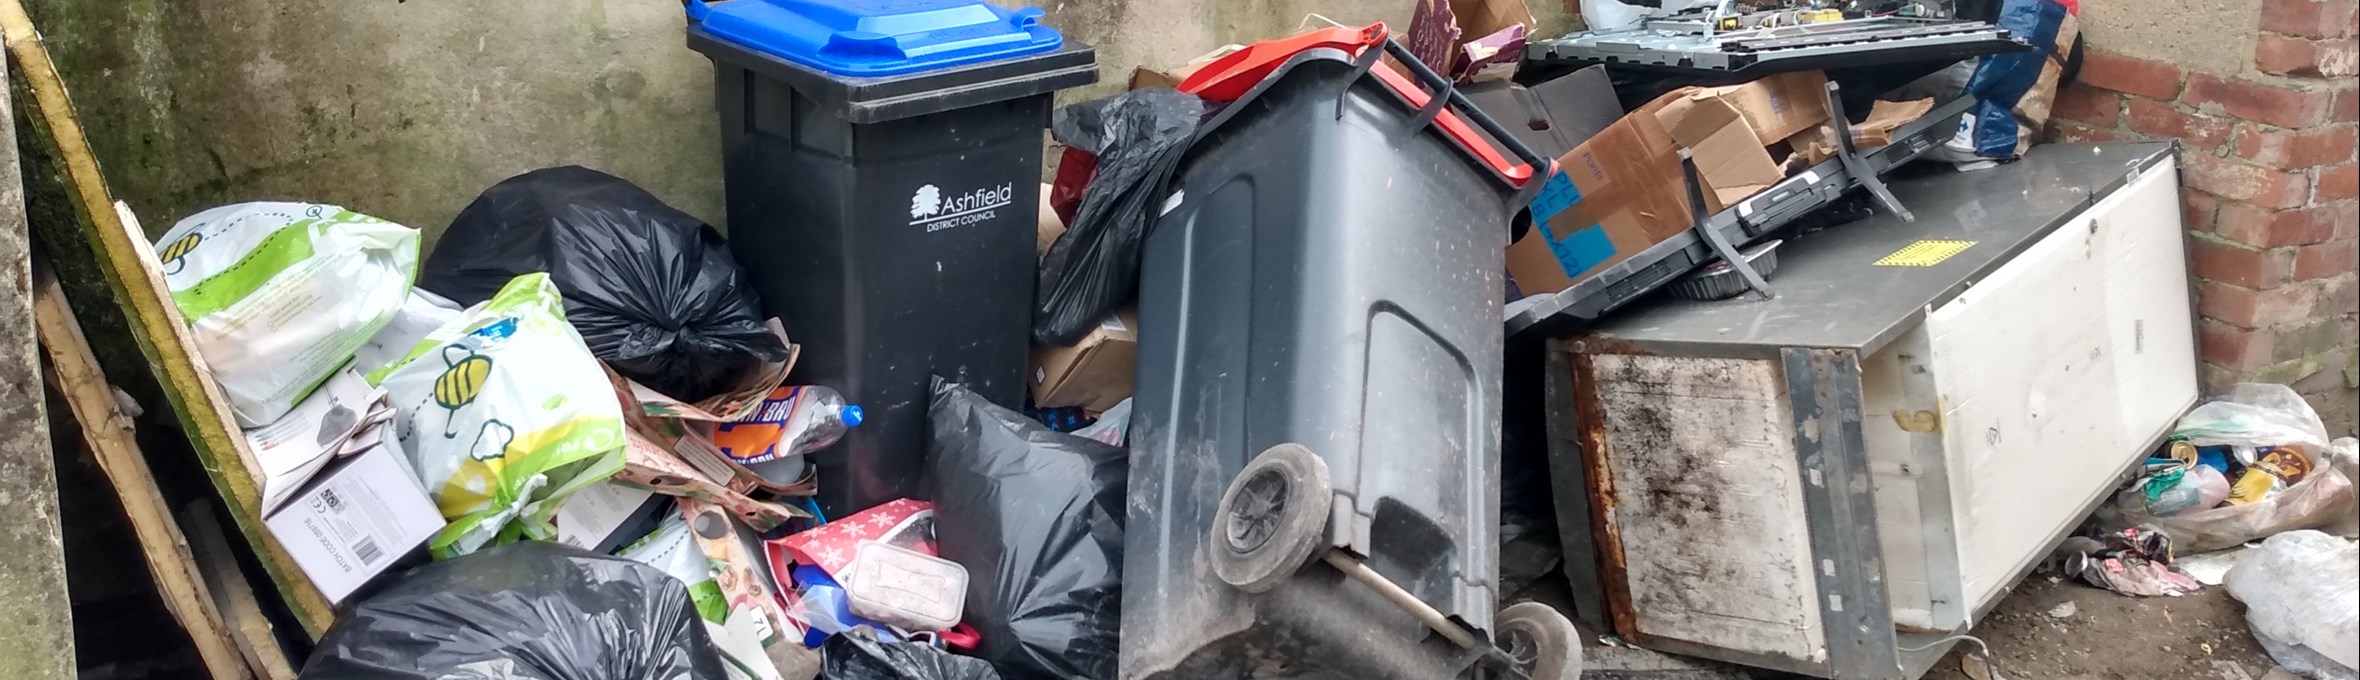 Overflowing waste at bin collection point Sutton in Ashfield